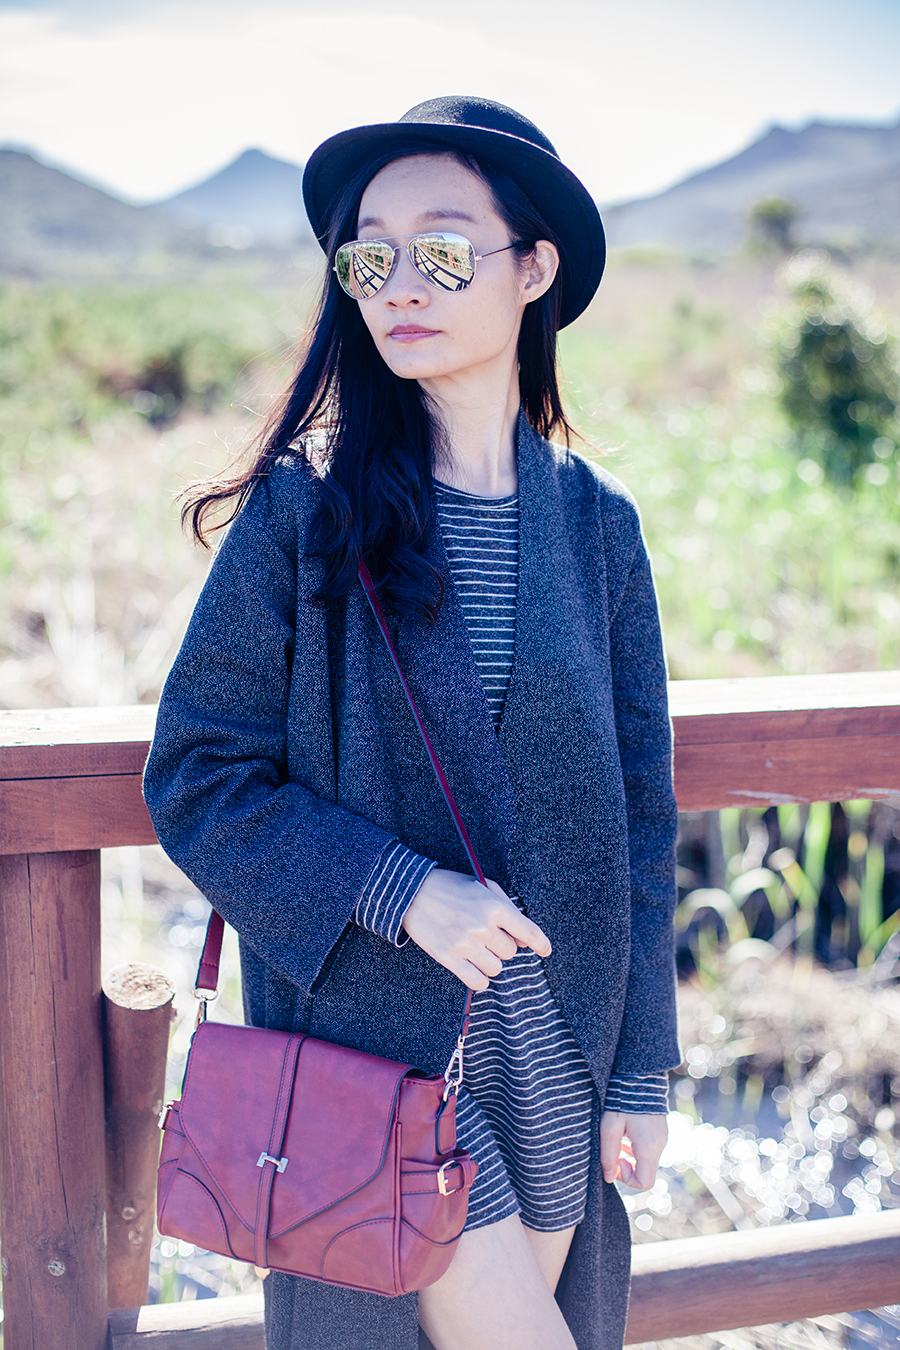 Silvermine Outfit: Zara striped tunic dress, Zara grey knit coat, Dressgal red satchel, Dressin silver mirror sunglasses.